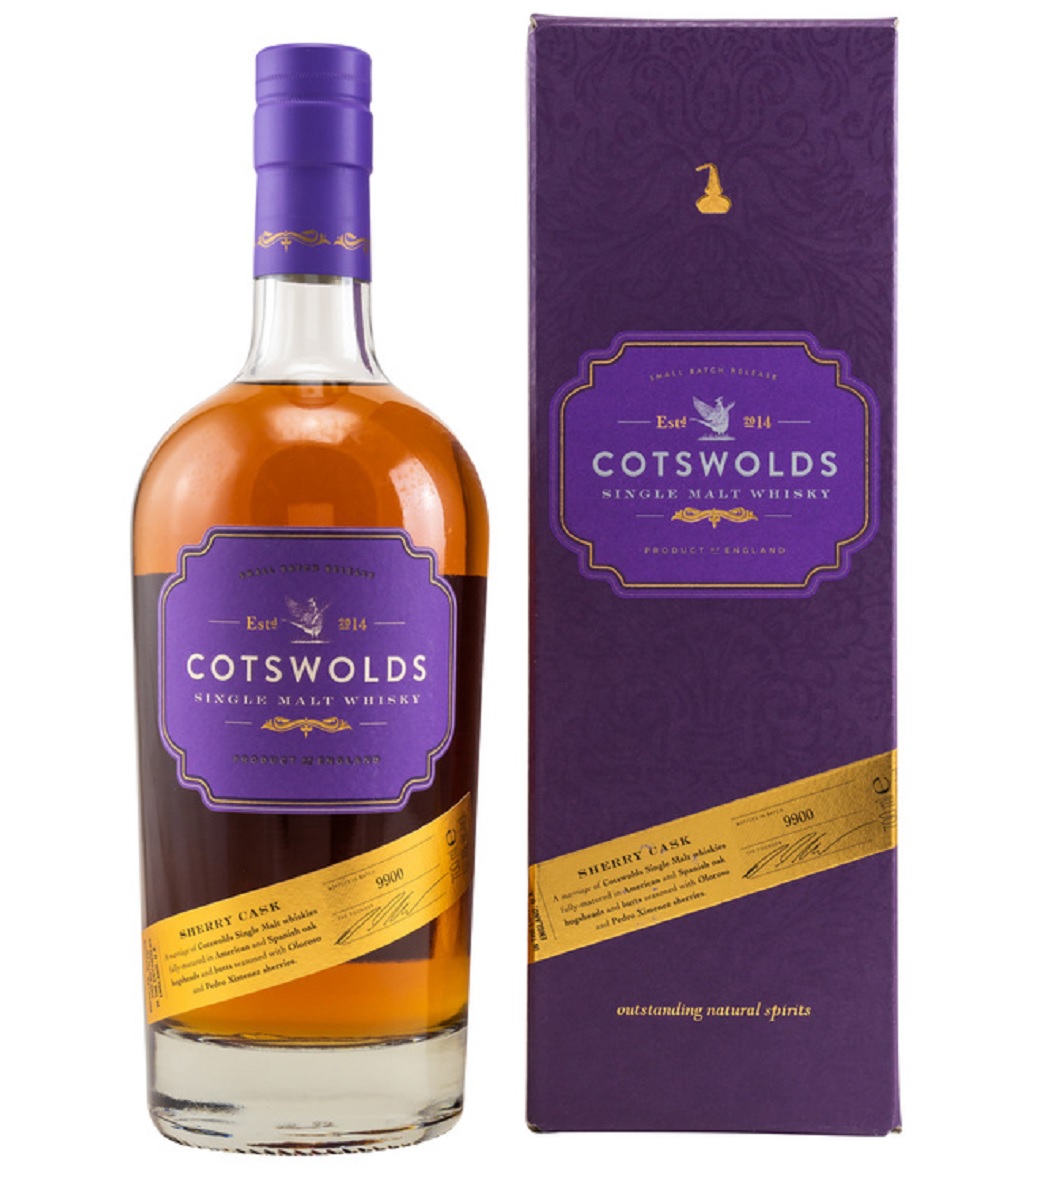 Cotswolds - Whisky aus der Idylle Englands